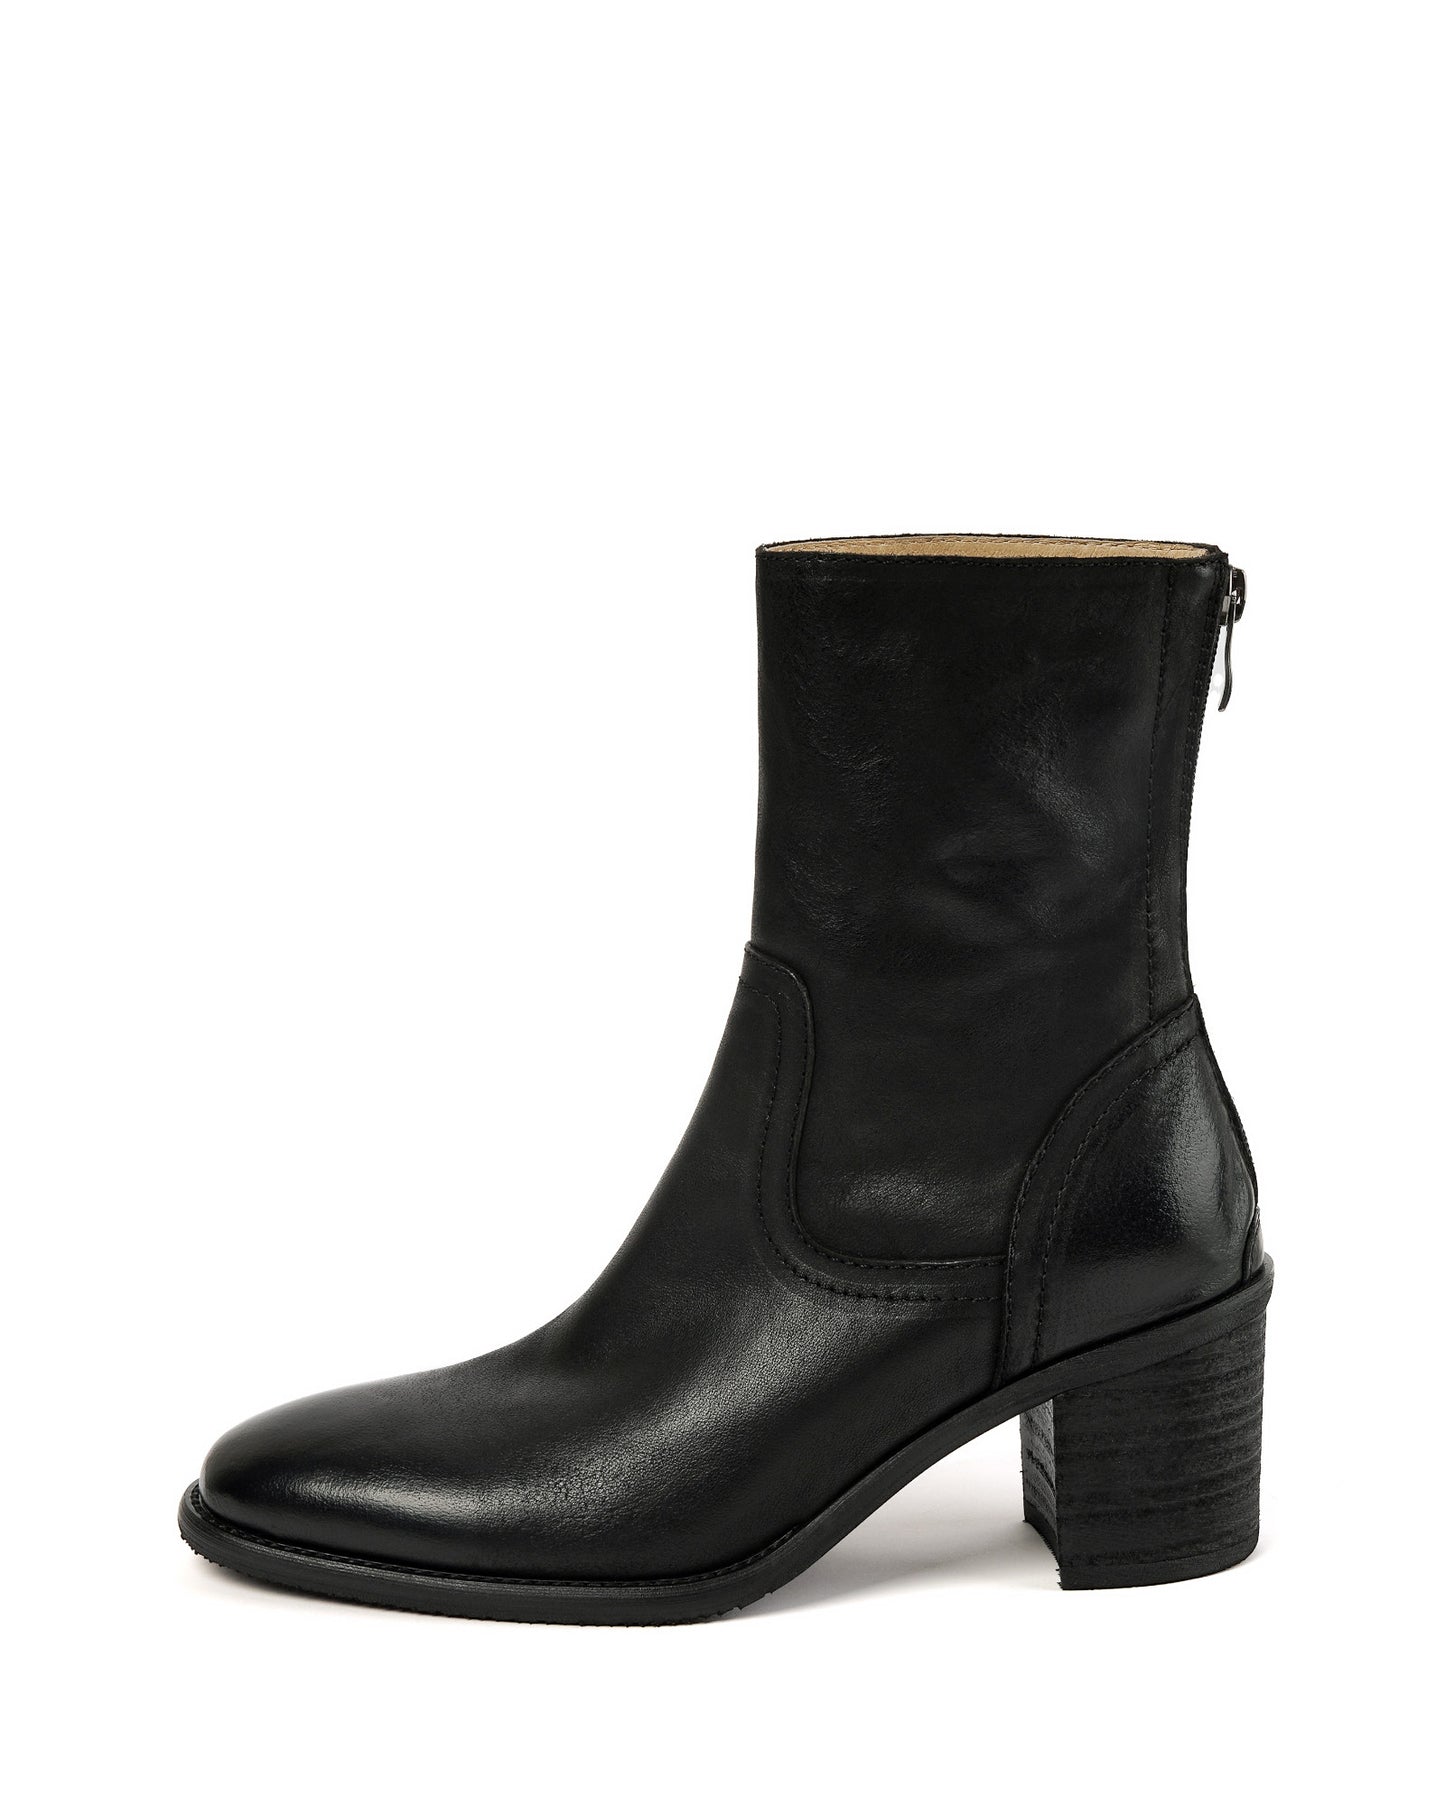 Gota-black-leather-boots-1